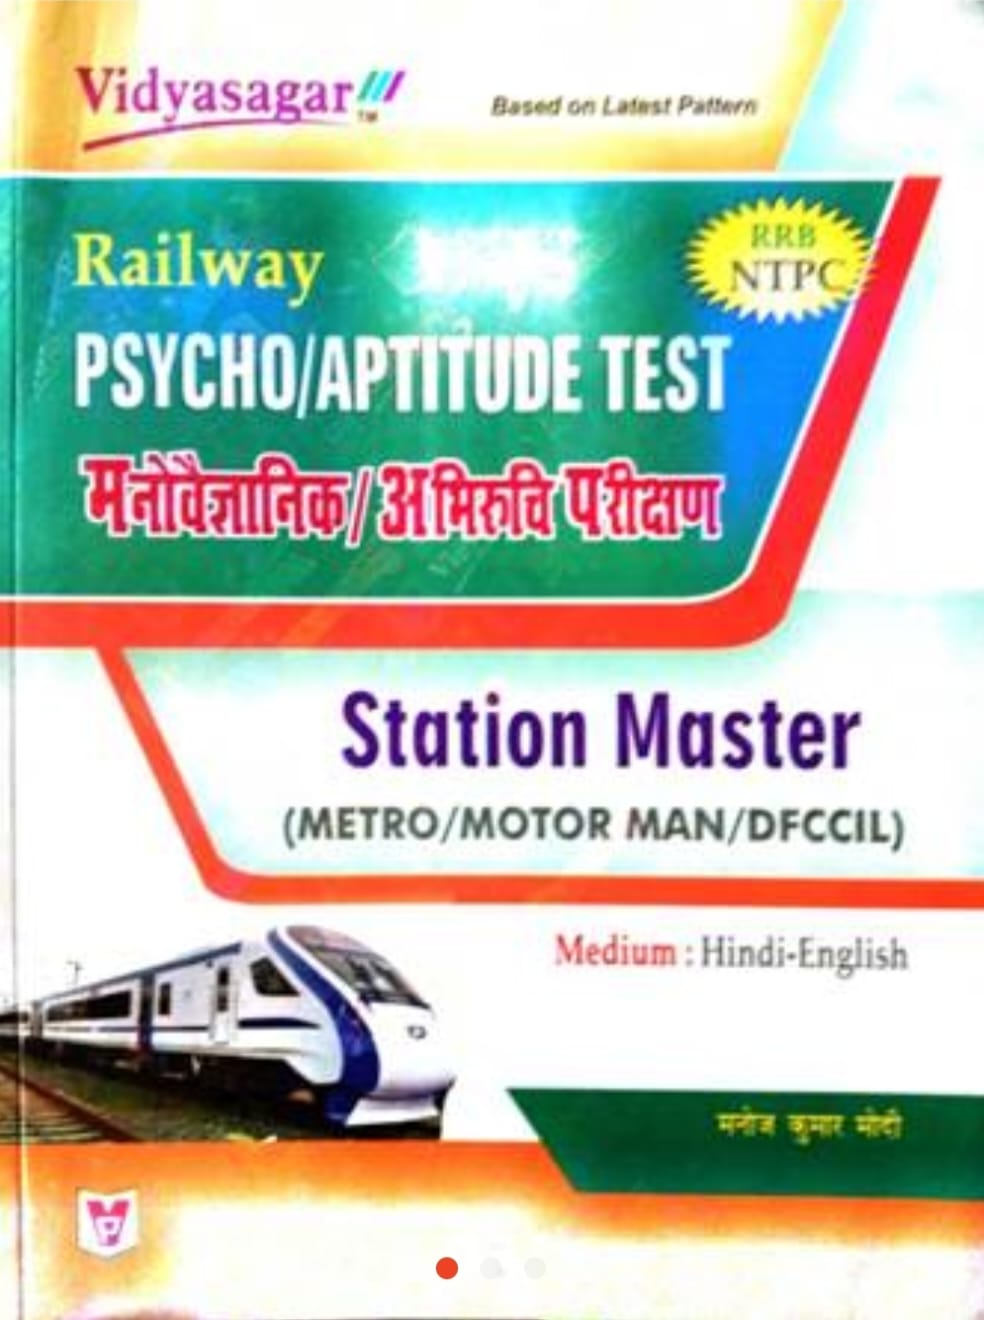 online-test-for-alp-psycho-railway-track-memory-test-live-test-5-rrb-alp-psycho-aptitude